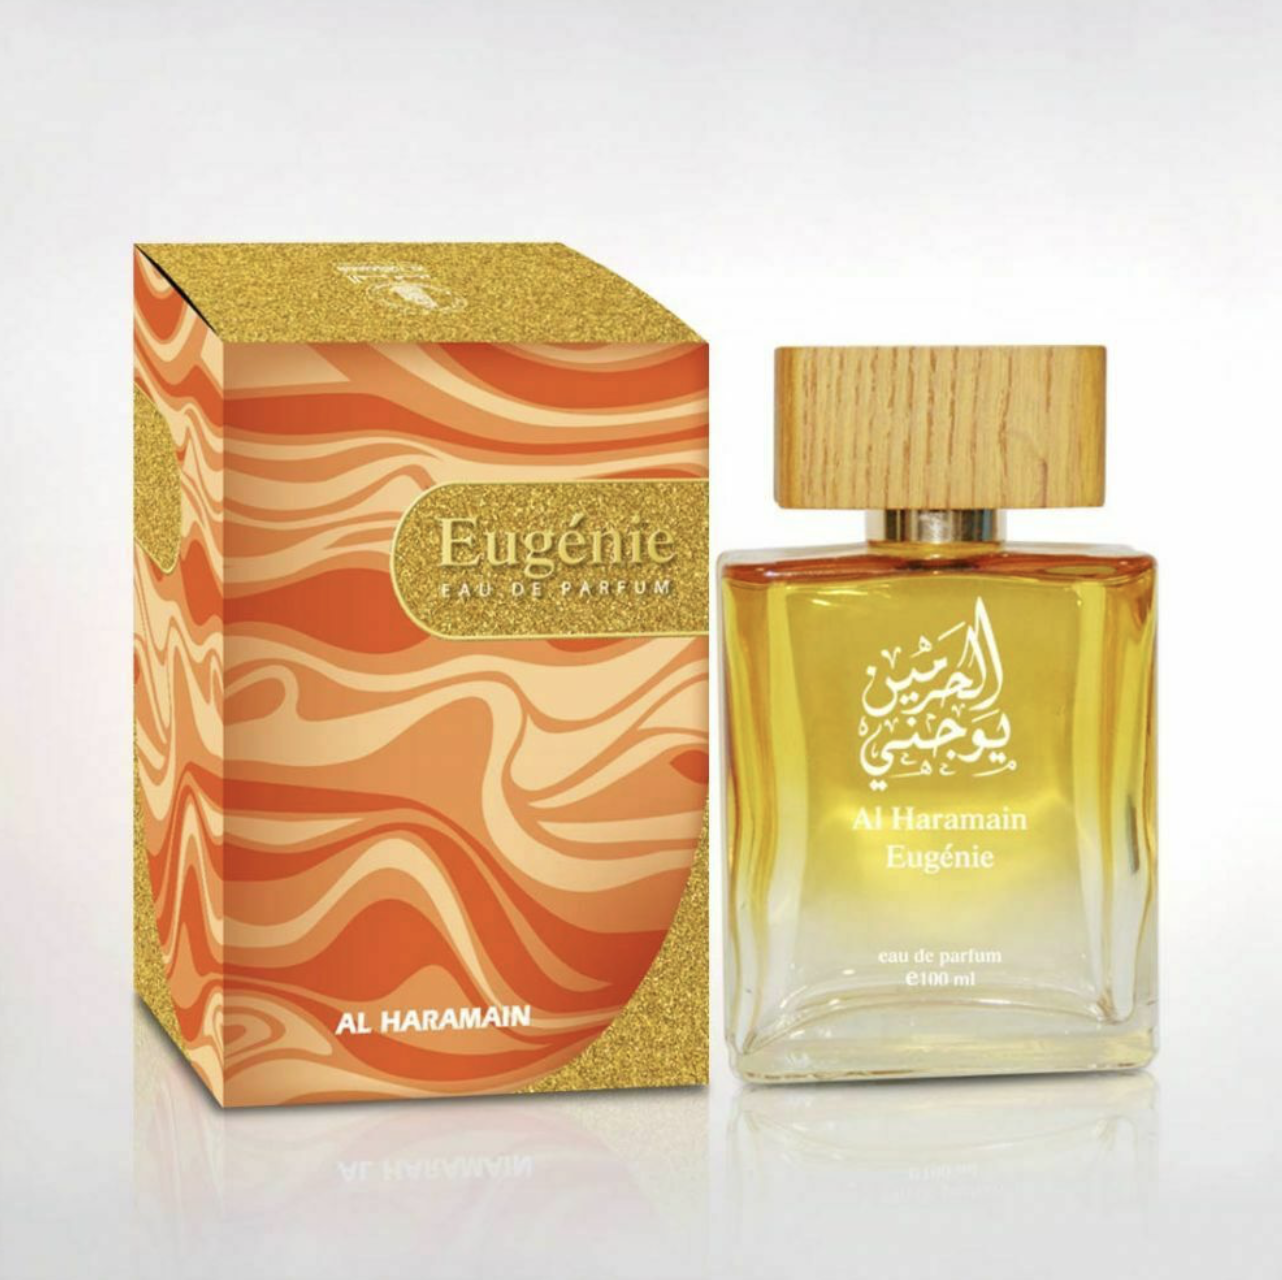 Eugenie EDP parfum by Al Haramain 100ml Spray - TOP USA SELLER